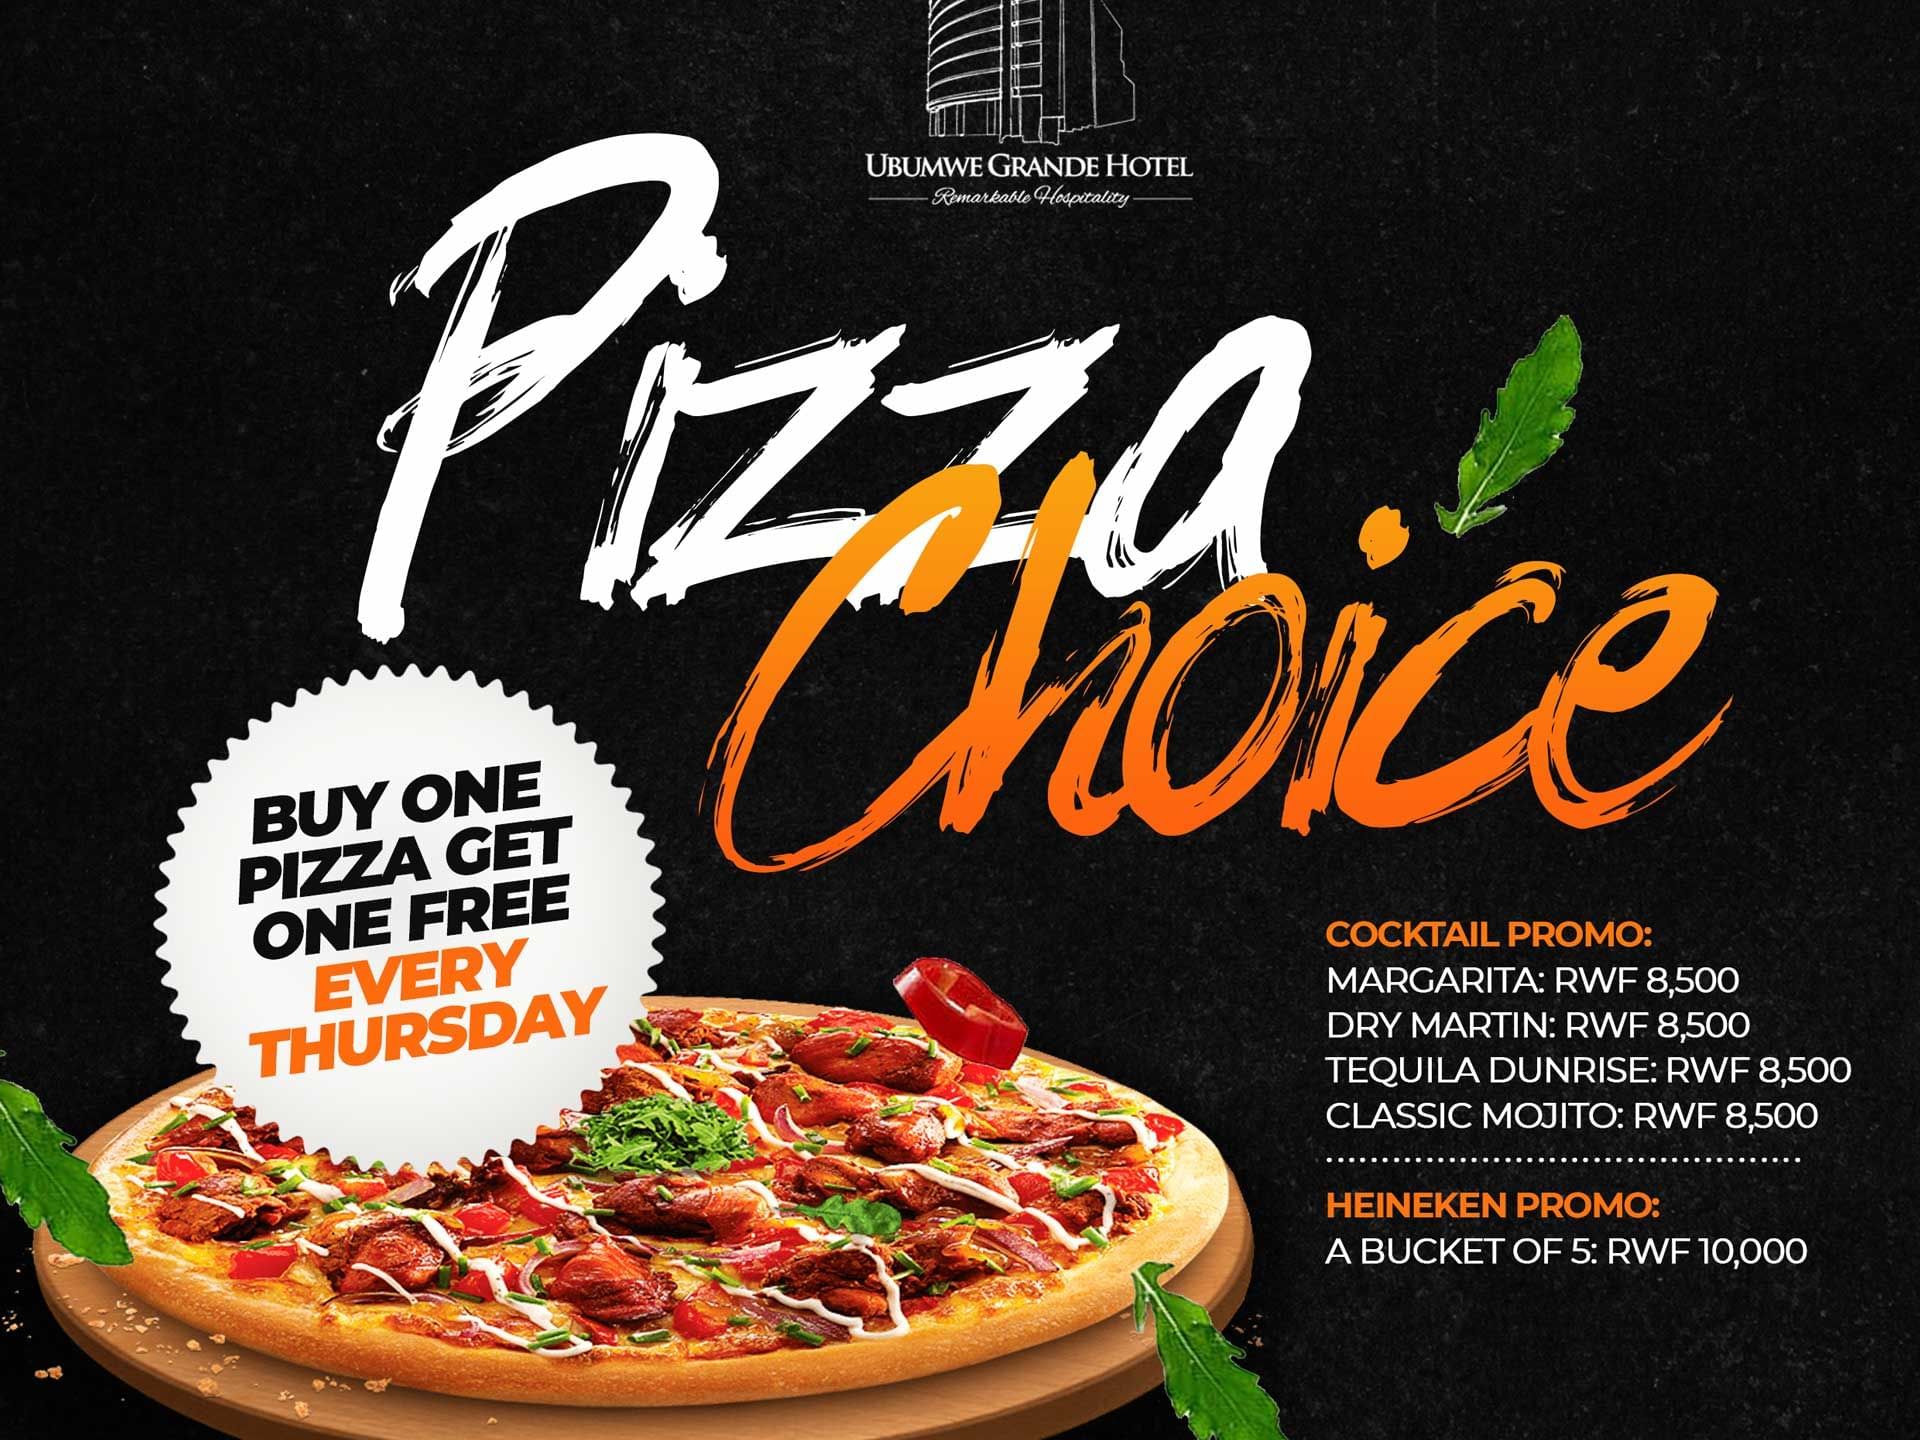 The Pizza Choice Offer at Ubumwe Grande Hotel in Kigali, Rwanda